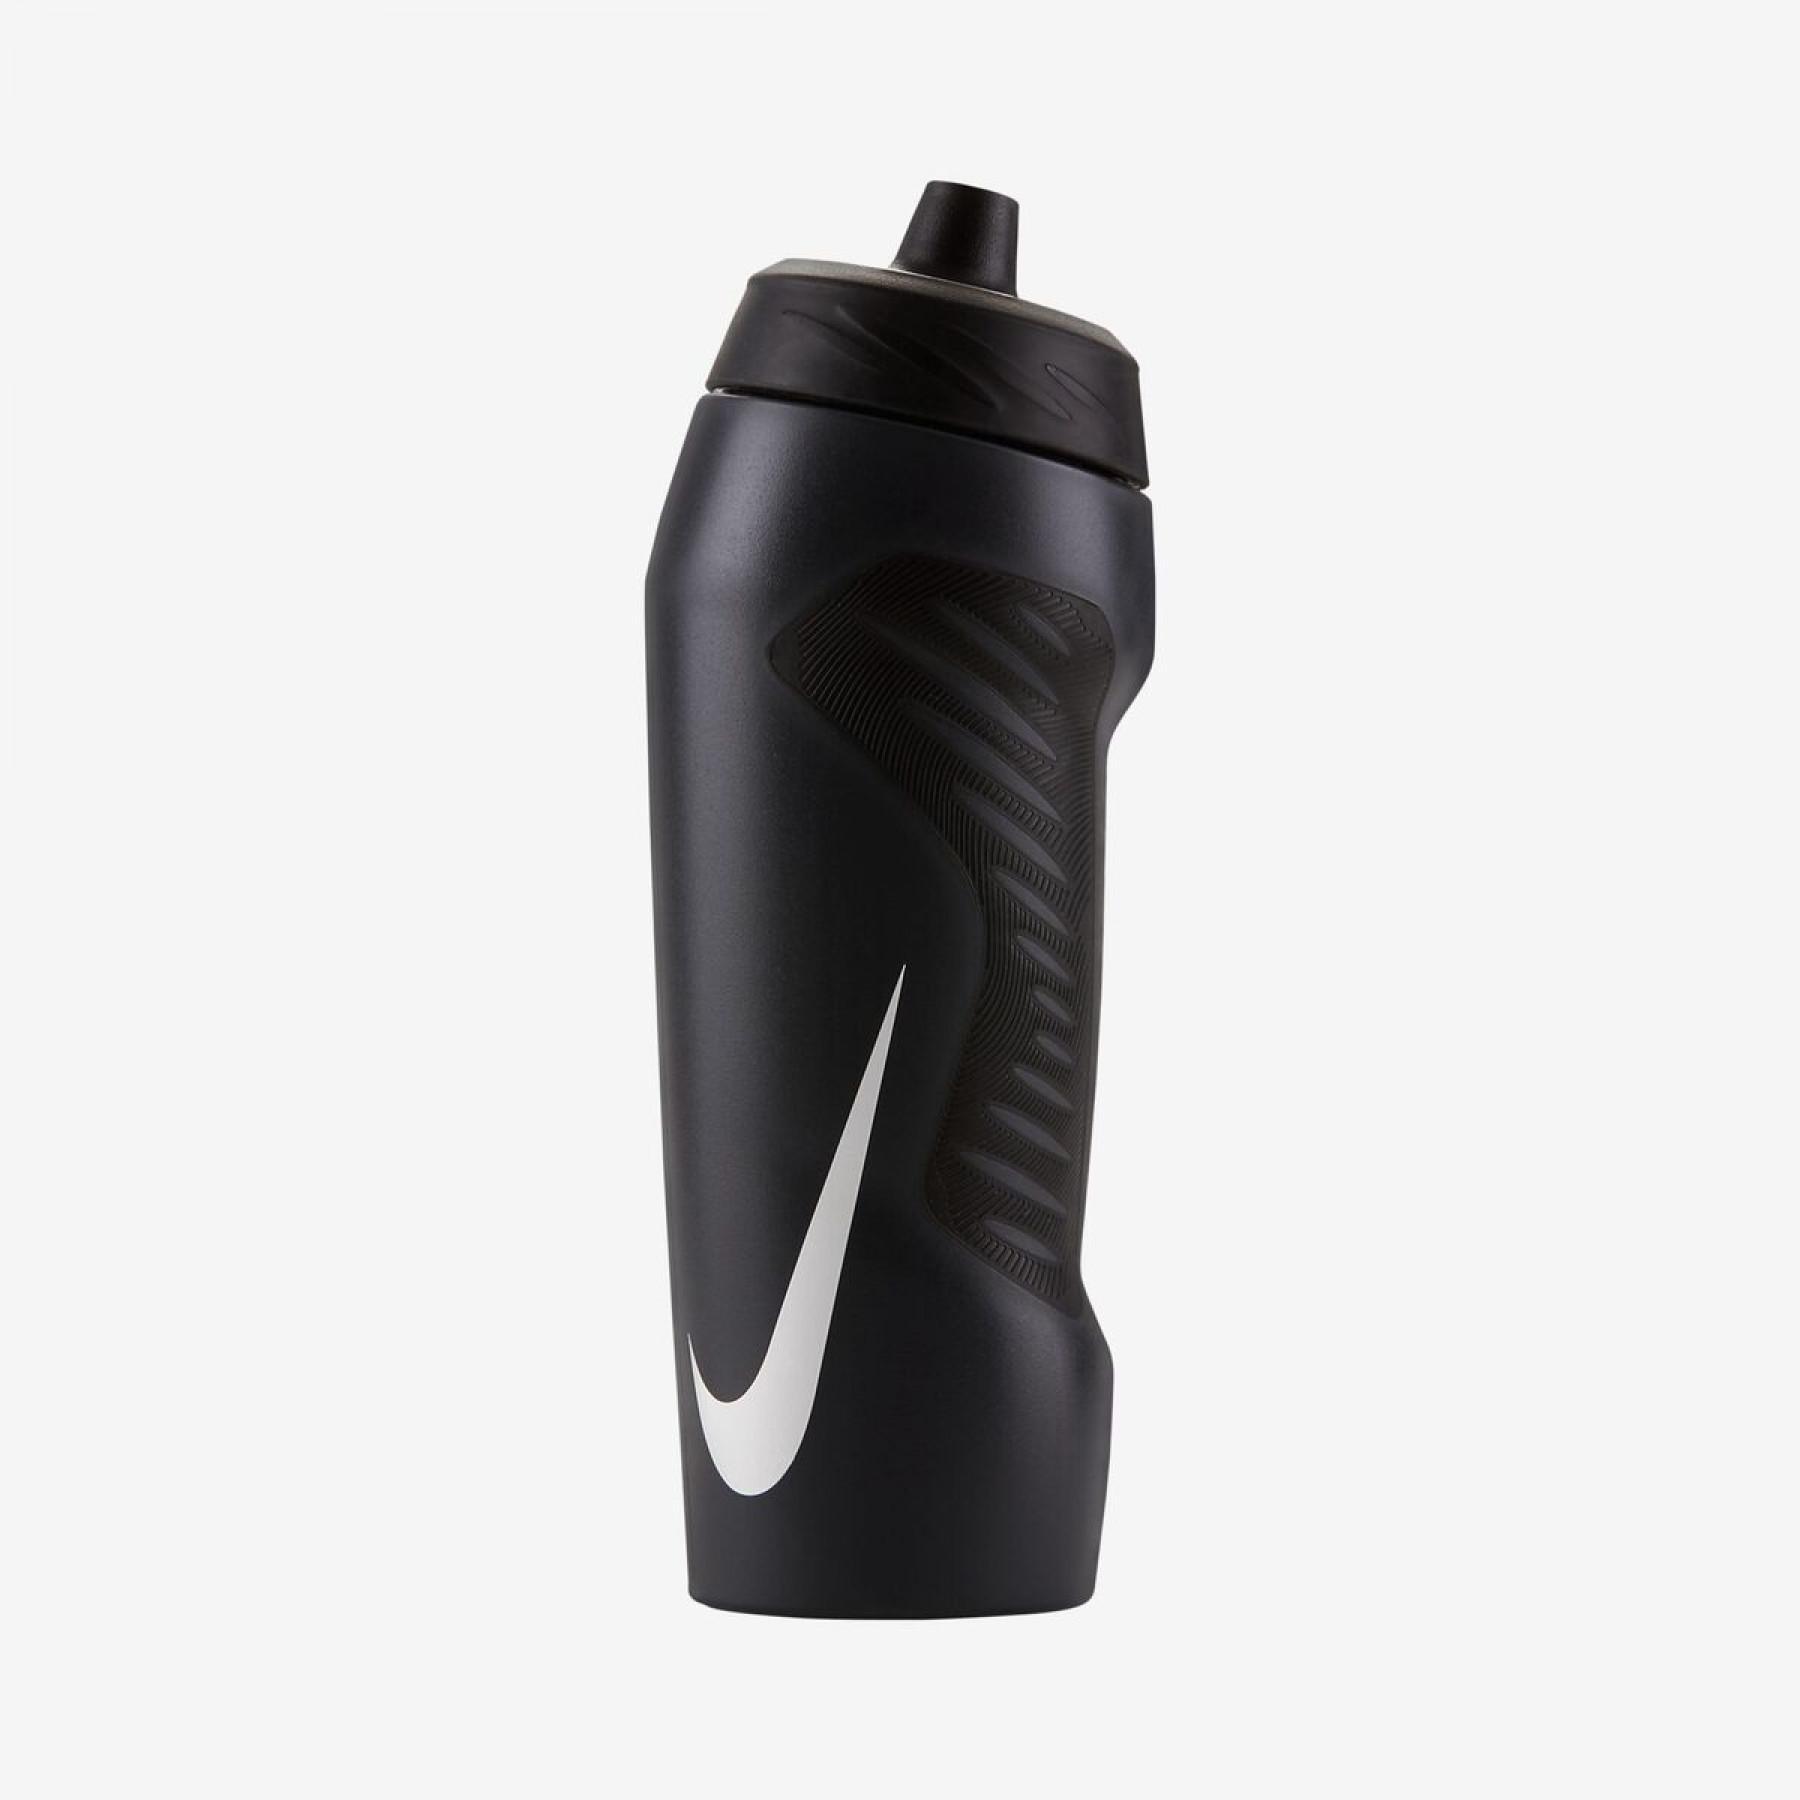 Trinkflasche Nike hyperfuel 710 ml